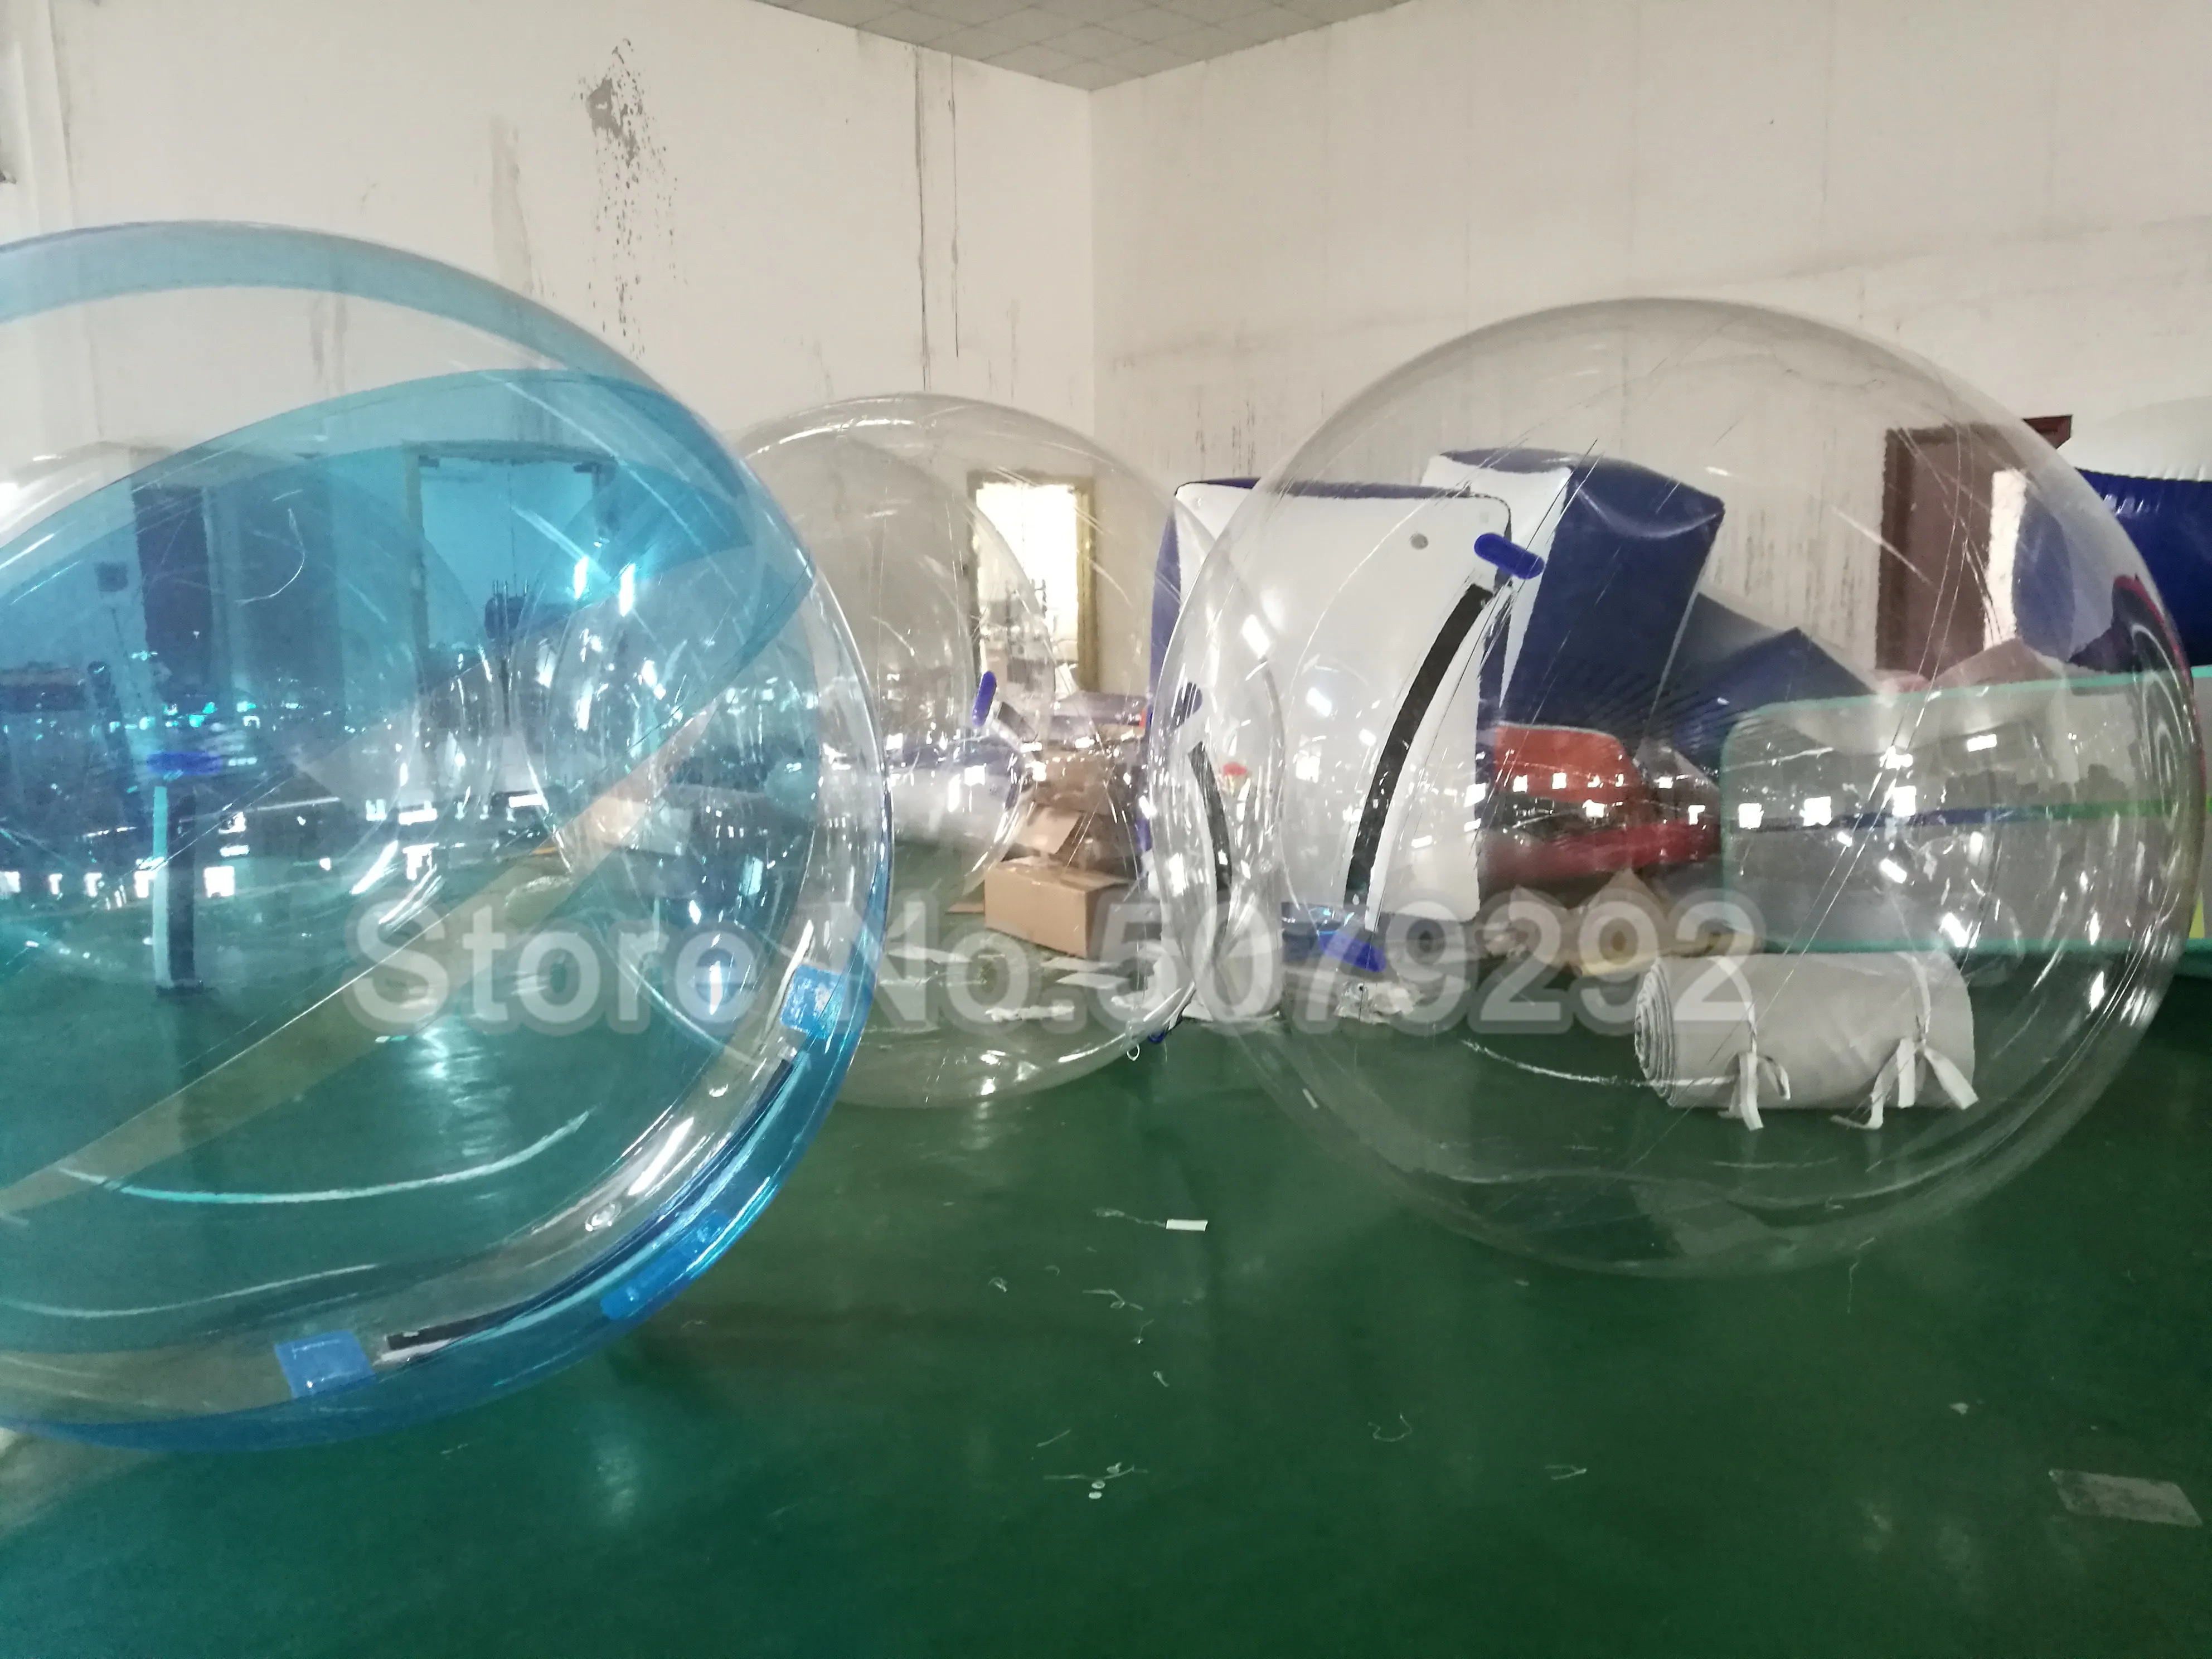 Ion 1 5m diameter inflatable water zorb ball for pool lake sea cheap water walking ball thumb200